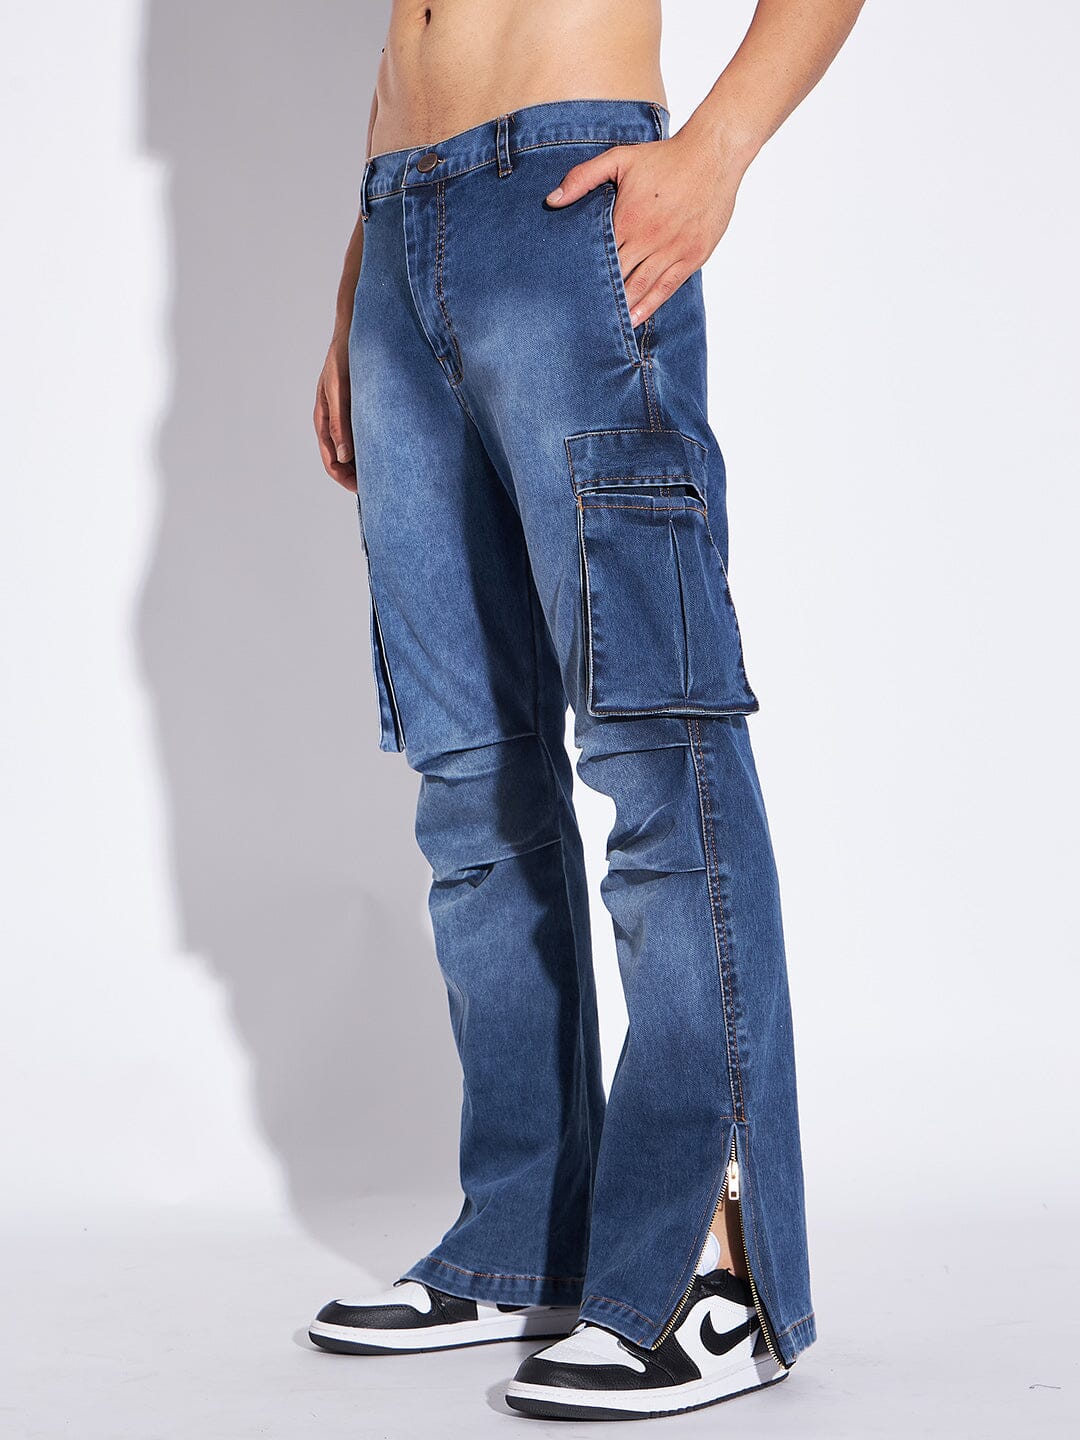 DDAPJ pyju Mens Denim Bib Overall Shorts Jeans Jumpsuit,Summer Short  Overalls for Men Walkshorts Casual Outdoor Adjustable Strap Dungaree Rompers  with Pockets - Walmart.com